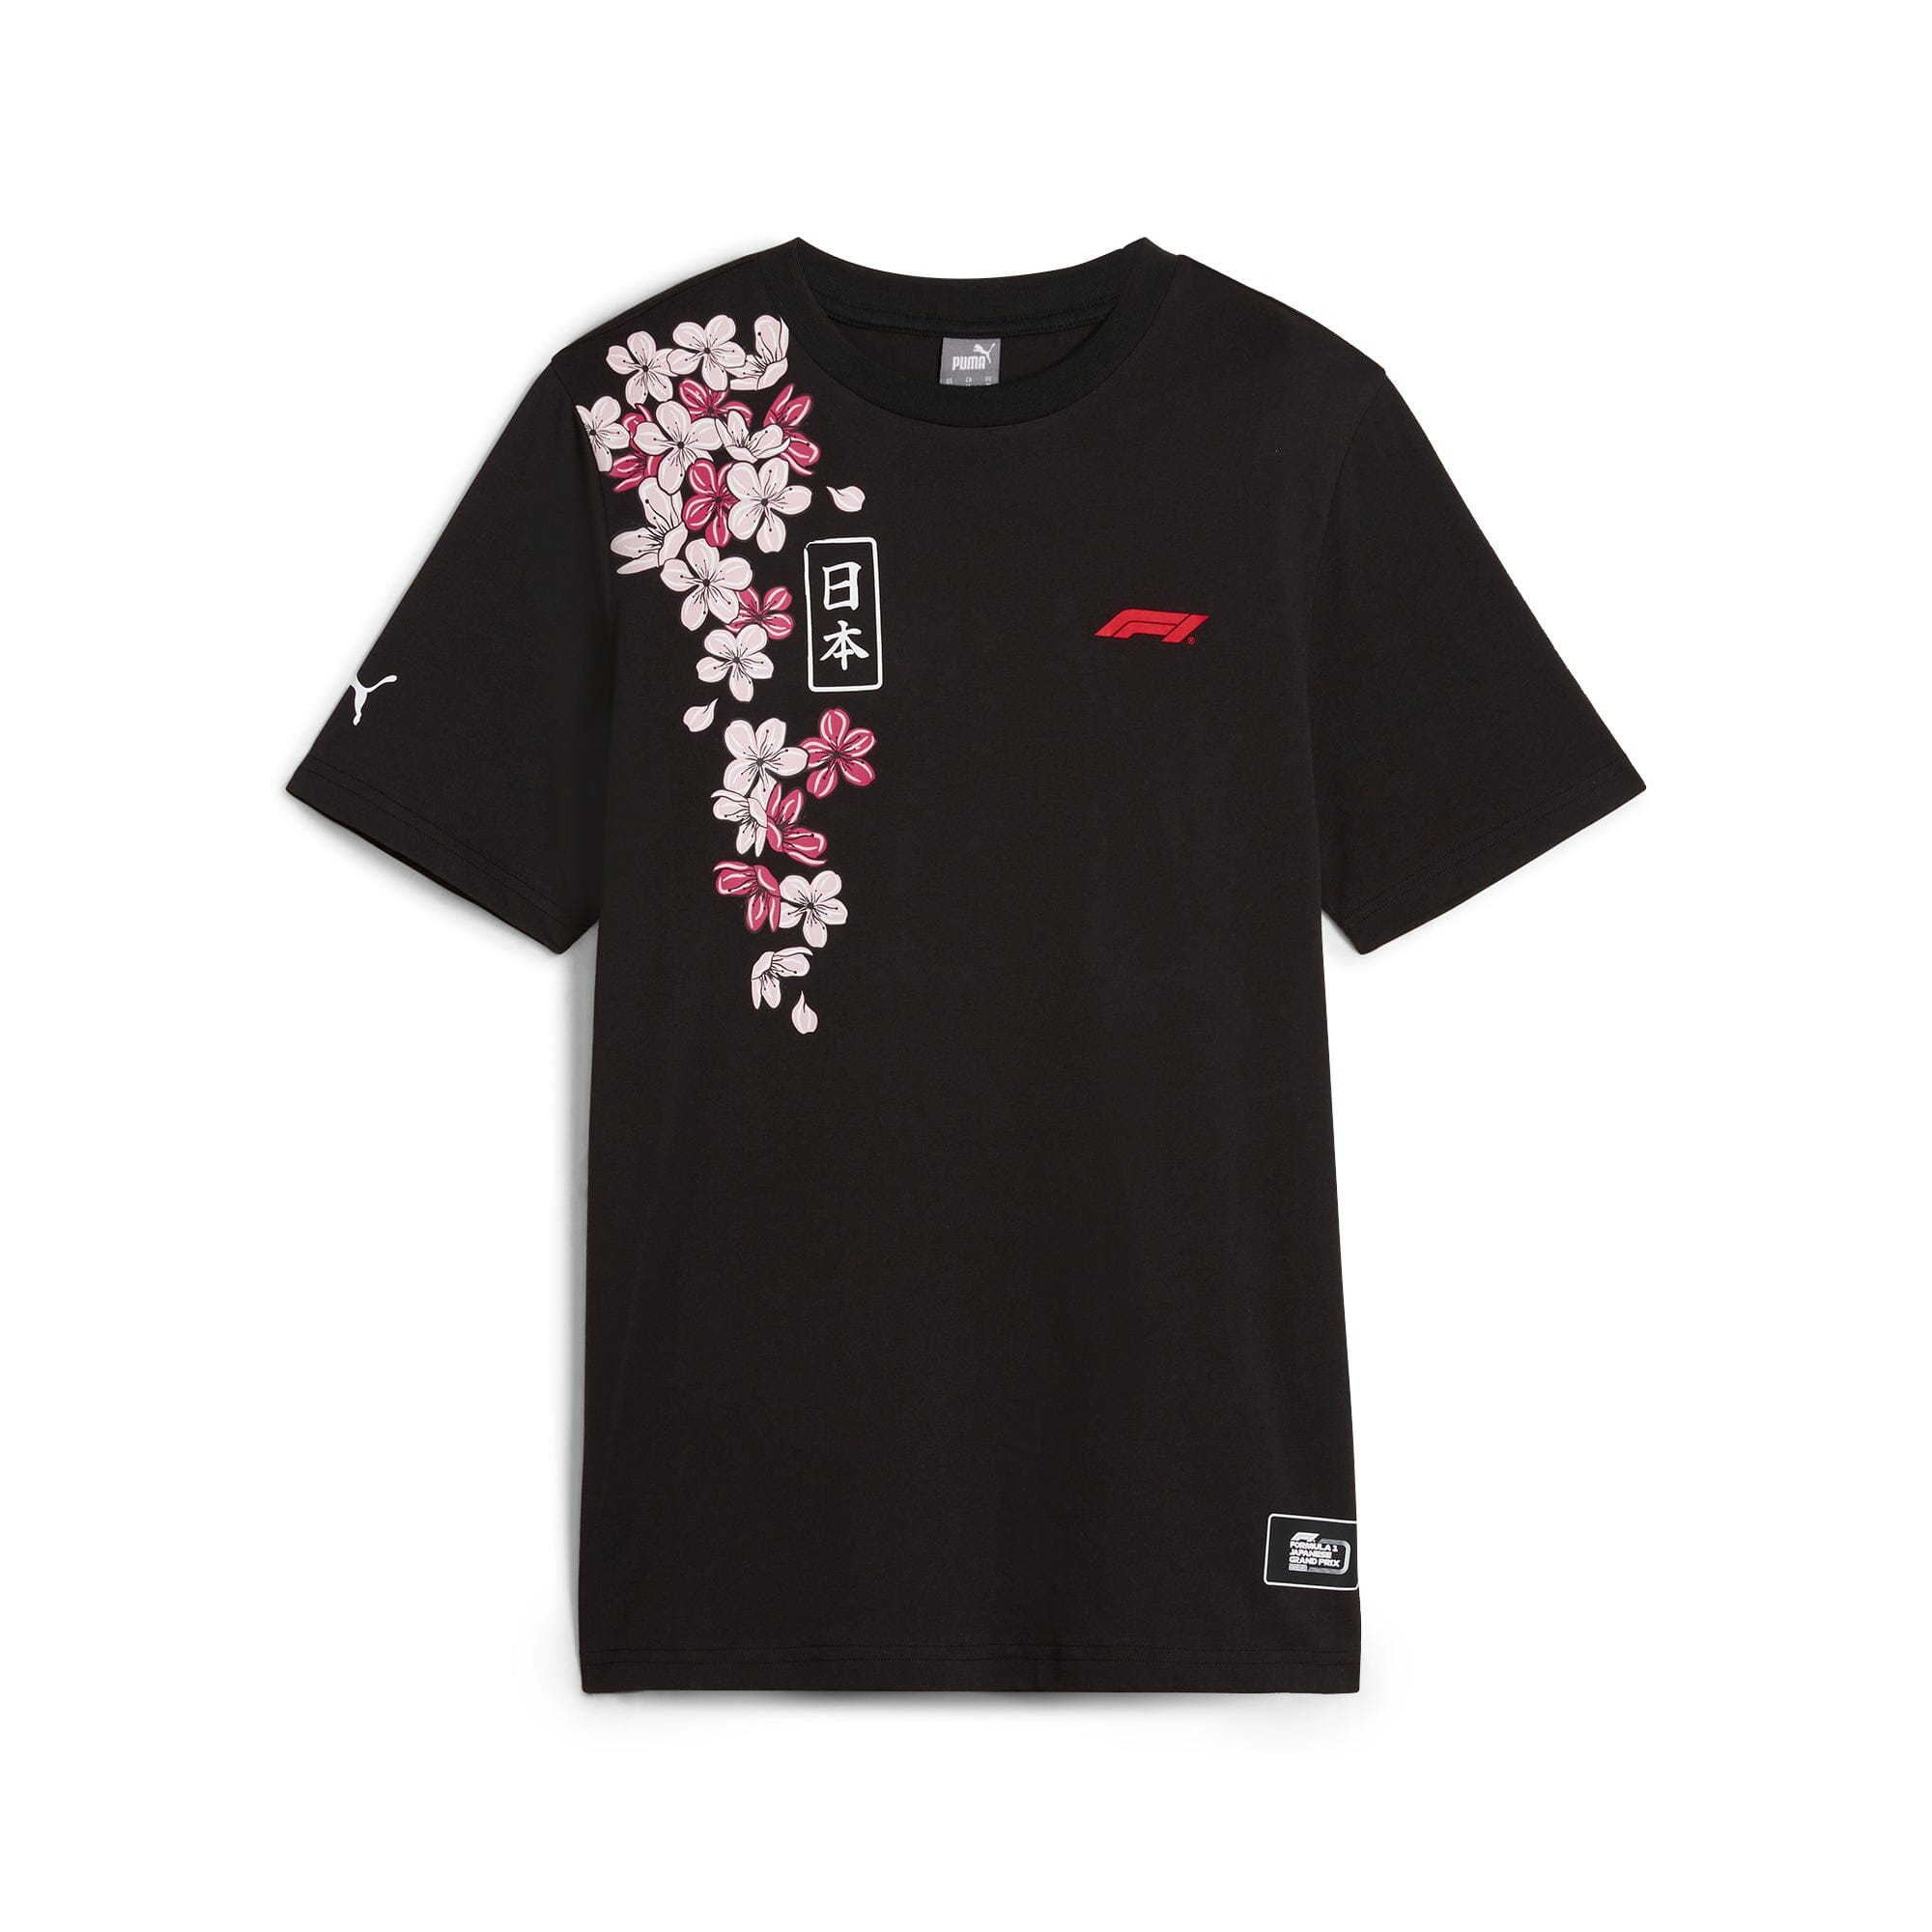 Formula 1 Tech Limited Edition Suzuka Japan GP Puma T-Shirt - White/Black